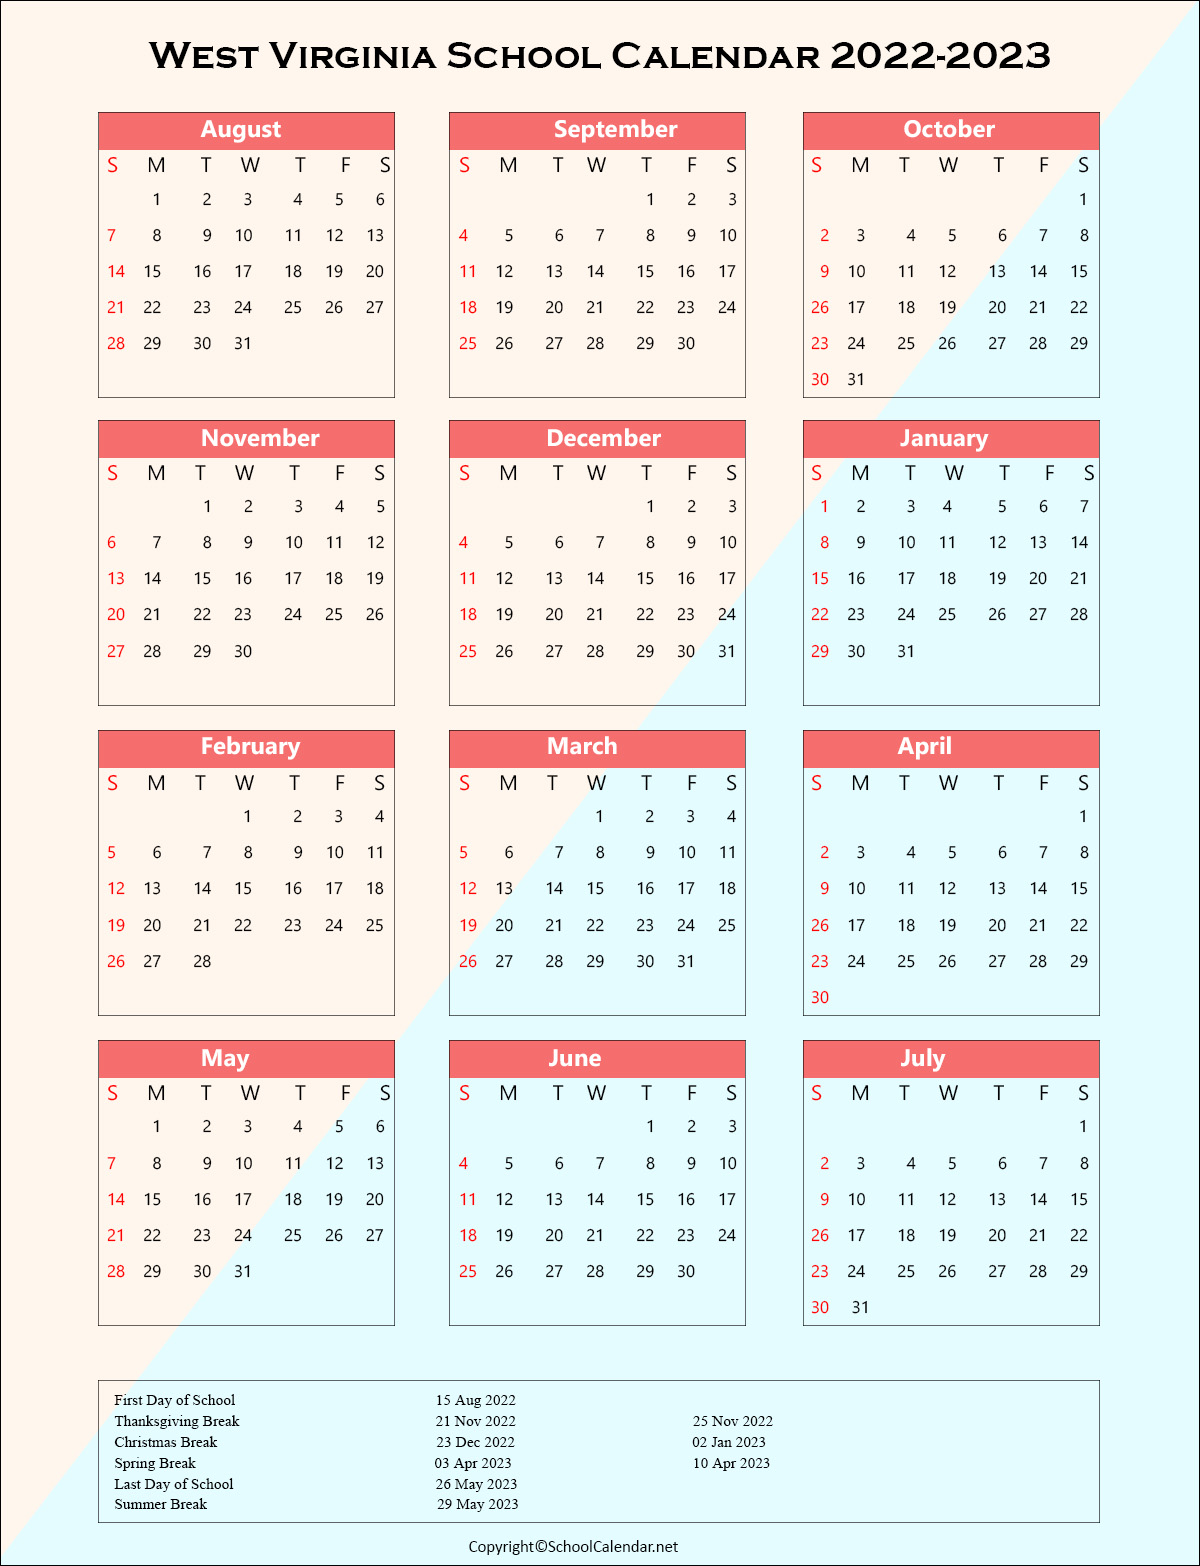 West-Virginia School Holiday Calendar 2022